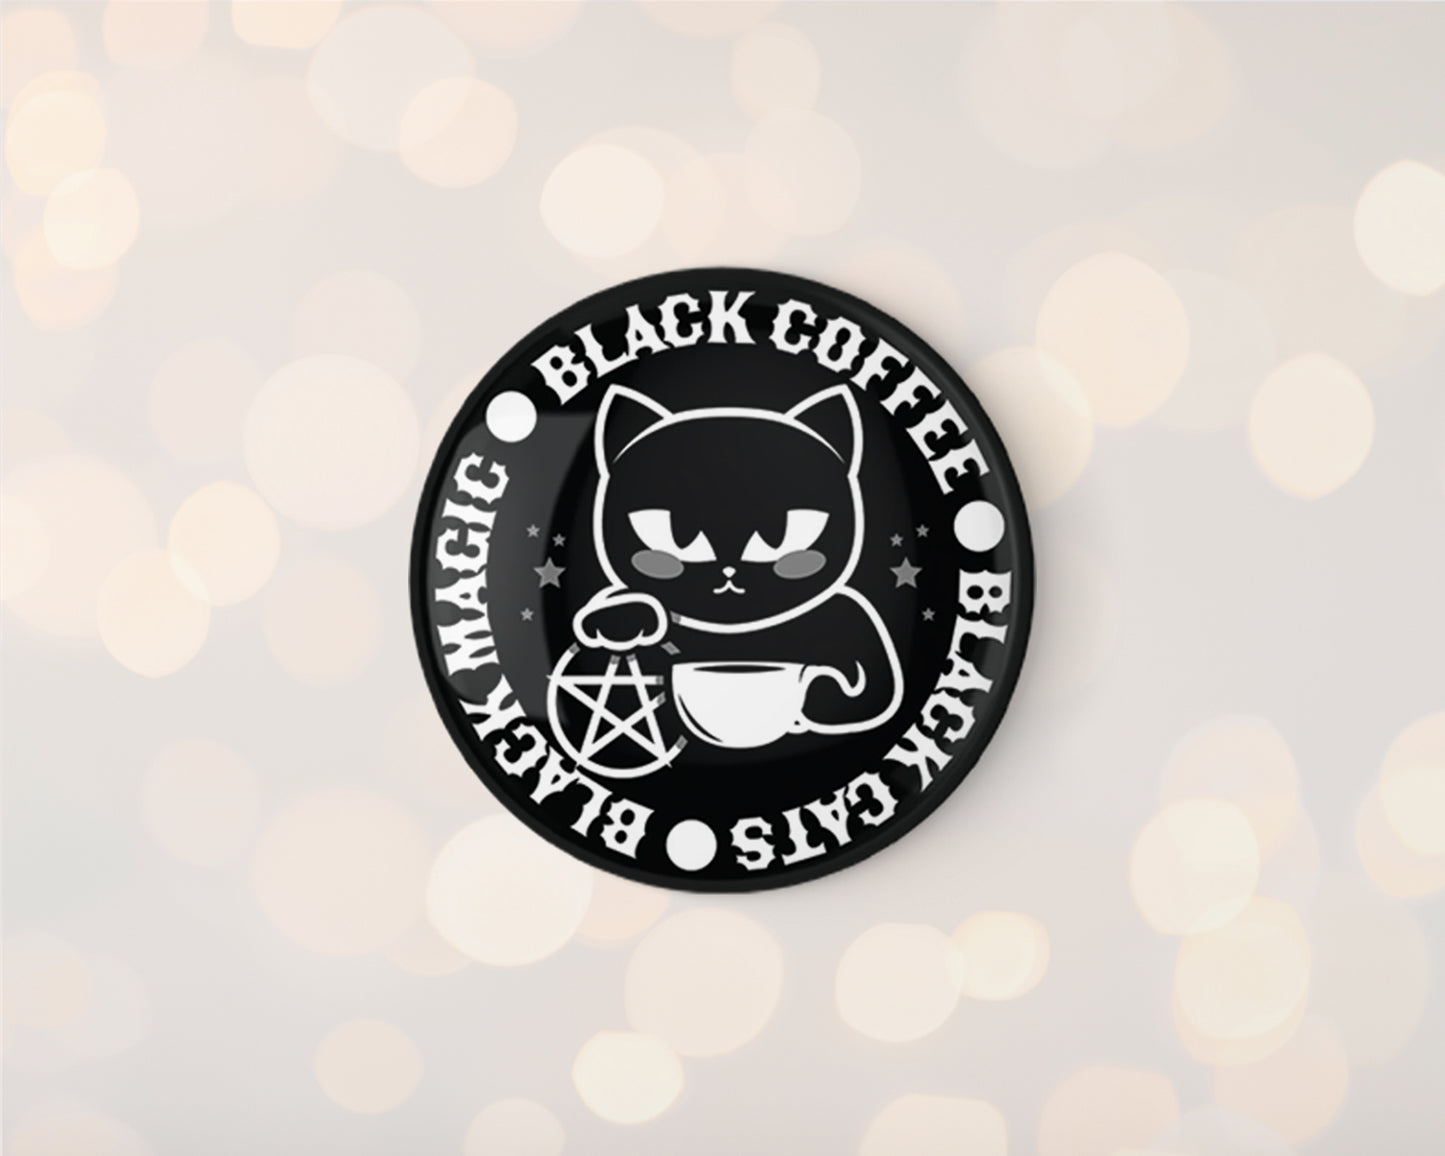 Black Cats - Black Coffee - Black Magic Design 32mm Badge